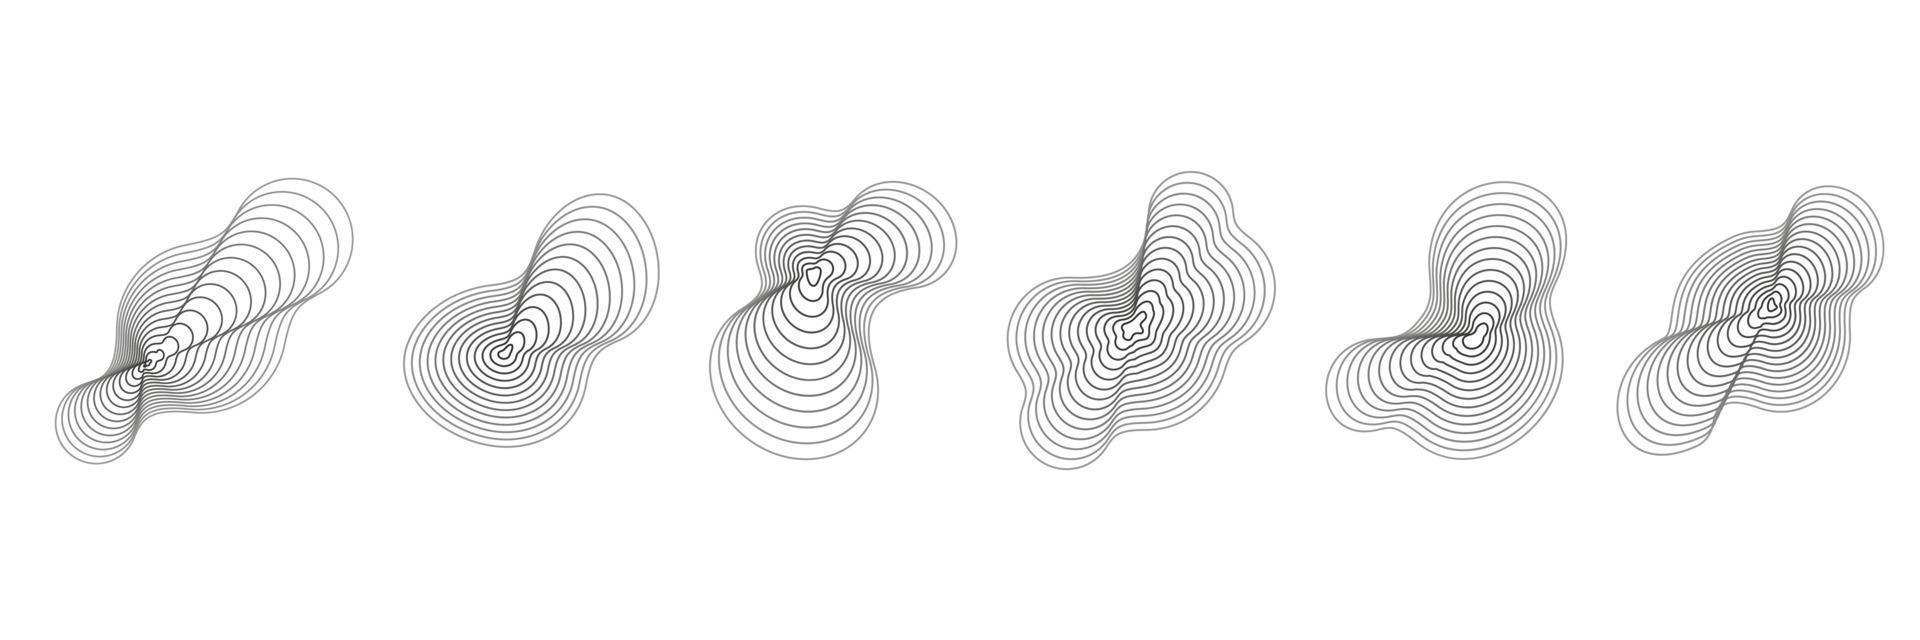 círculos de topografia abstrata. formas de textura orgânica. conjunto de ilustrações de contorno de vetor. vetor